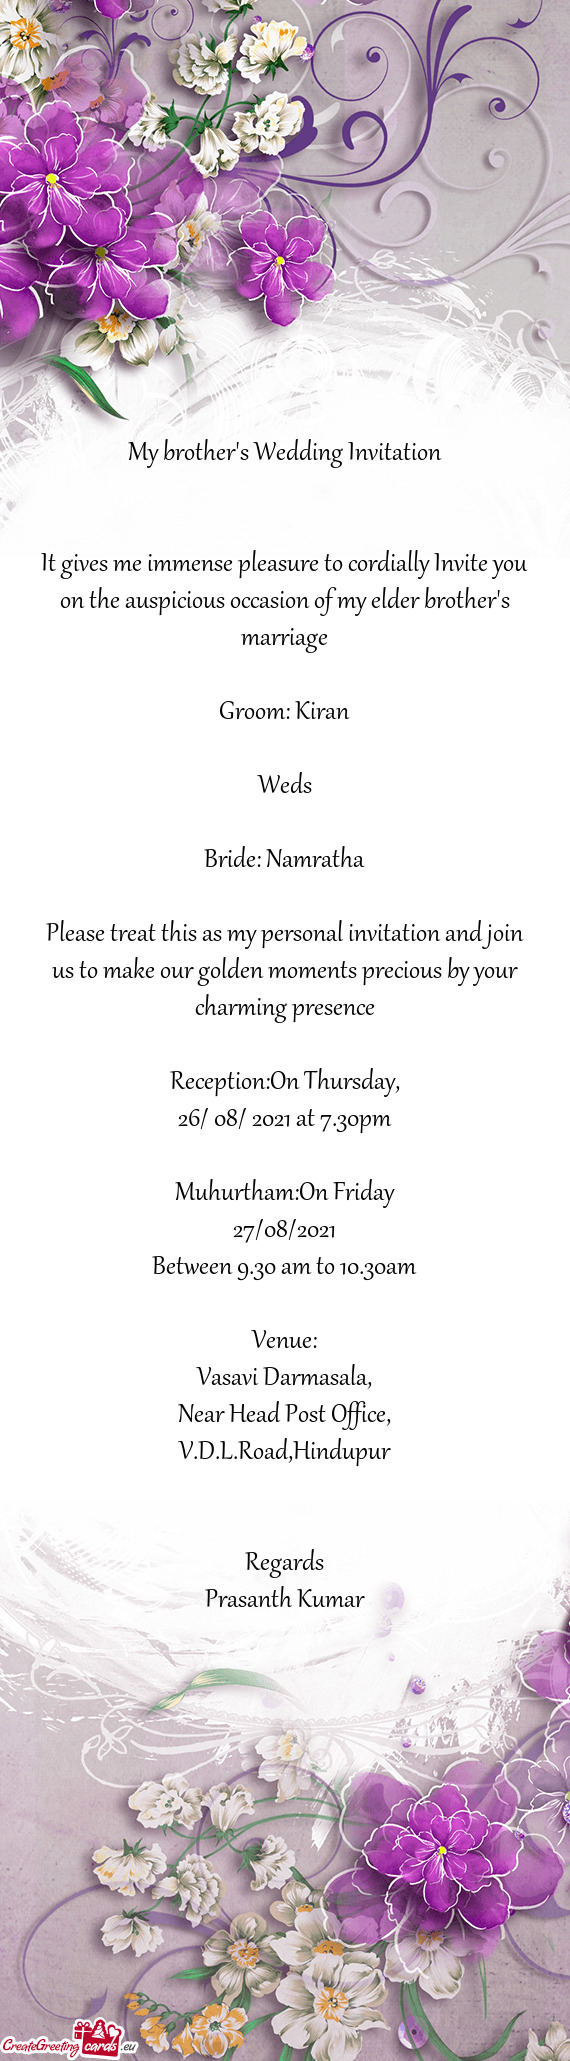 Bride: Namratha